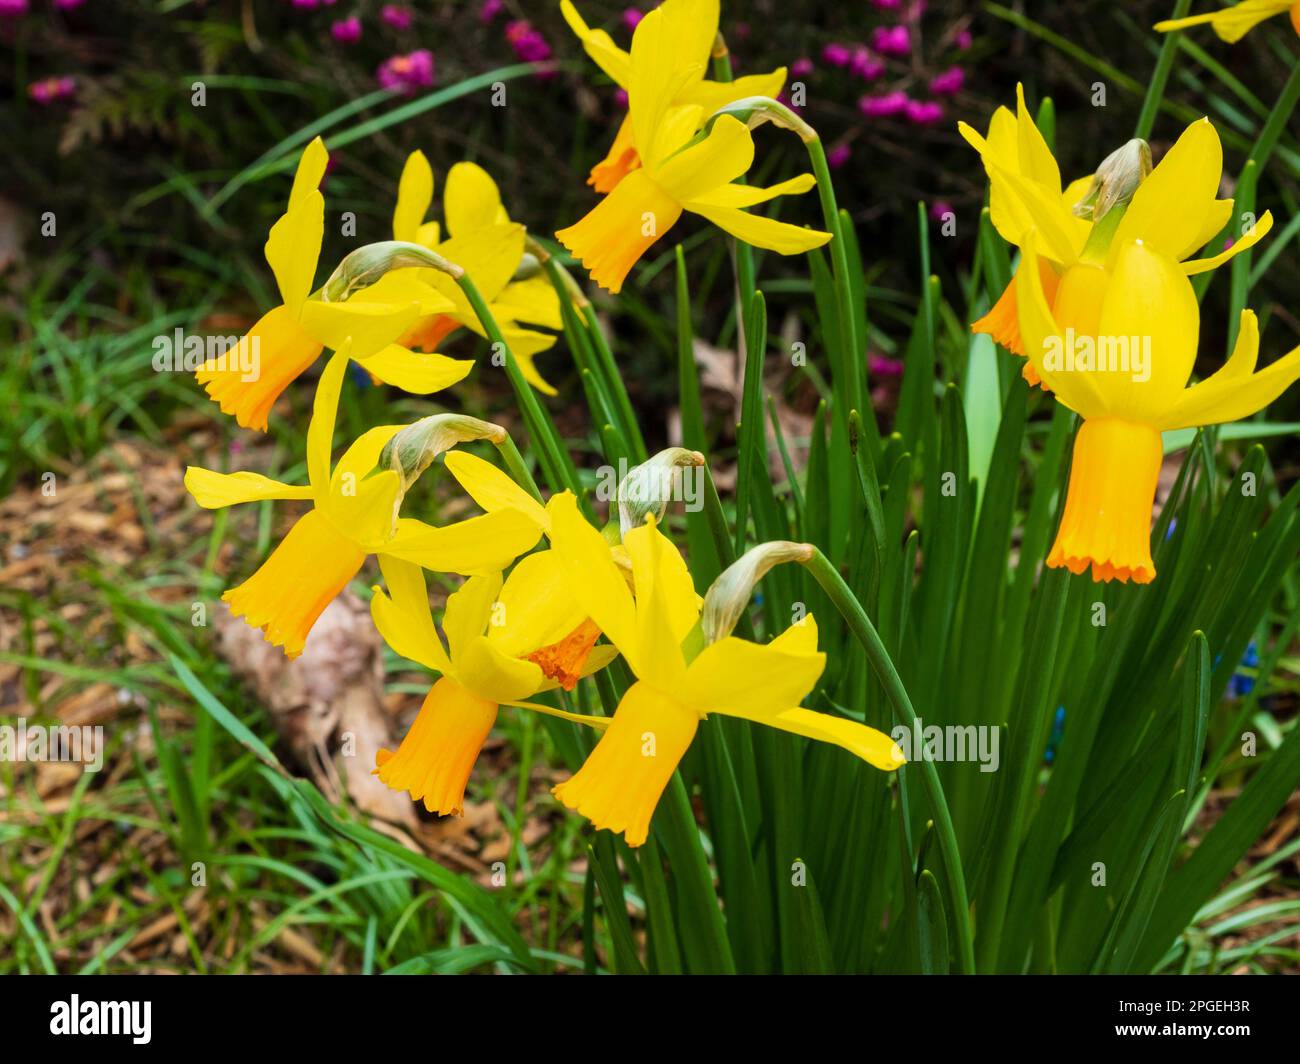 Orange trumpet and yellow, reflexed petals of the dwarf cyclamineus hybrid daffodil, Narcissus 'Jetfire' Stock Photo